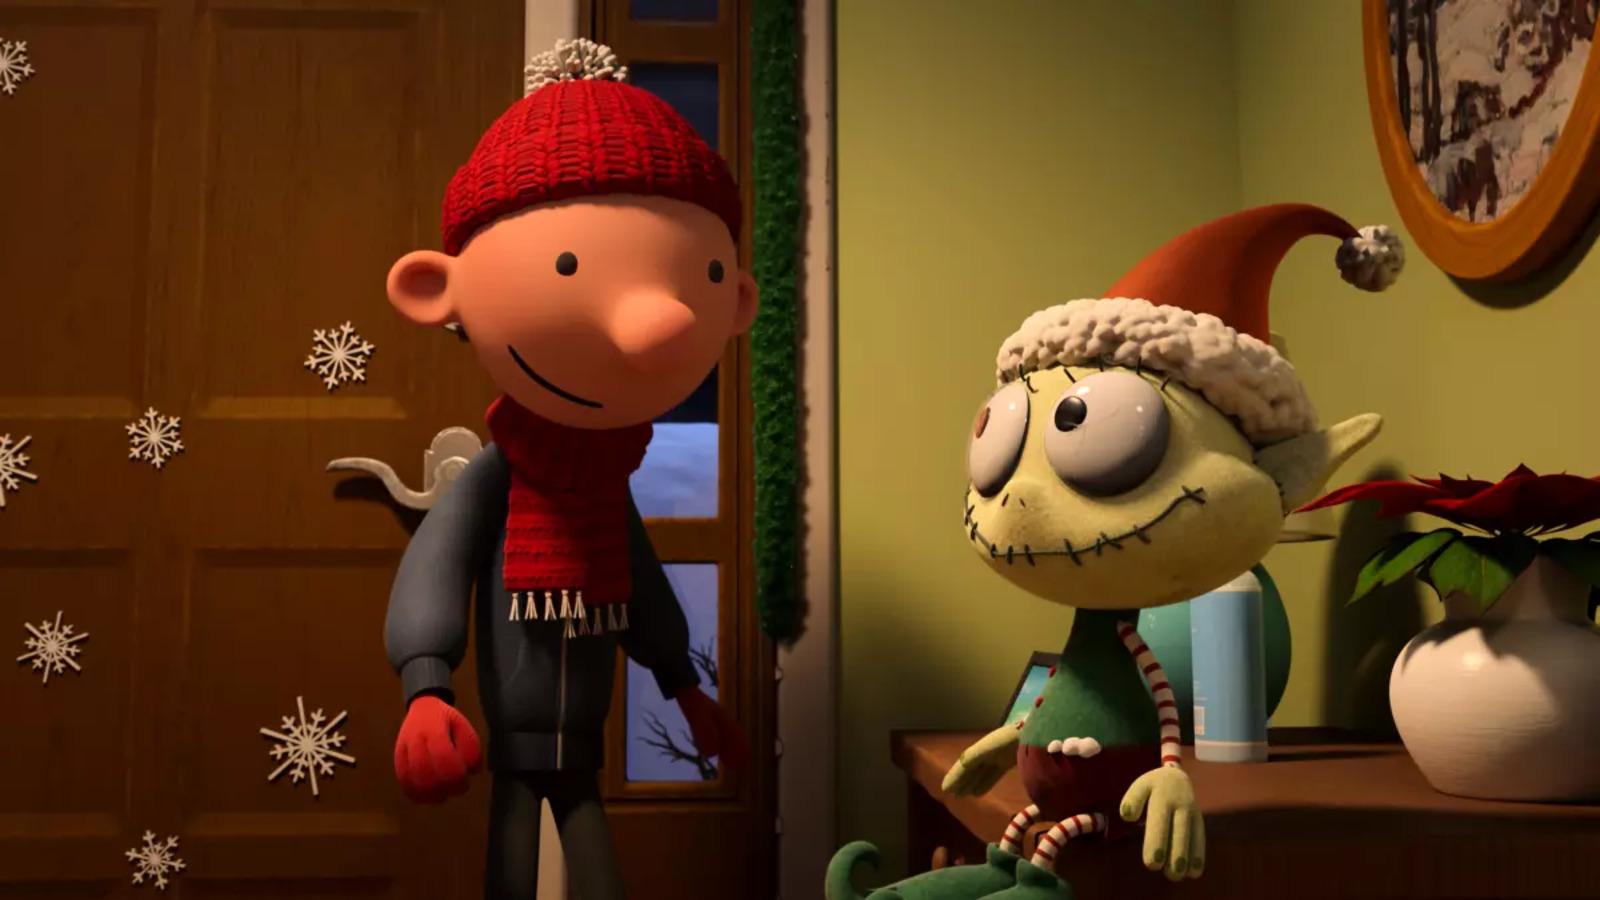 Diary of a Wimpy Kid movie “ruins Christmas” with Santa spoiler - Dexerto